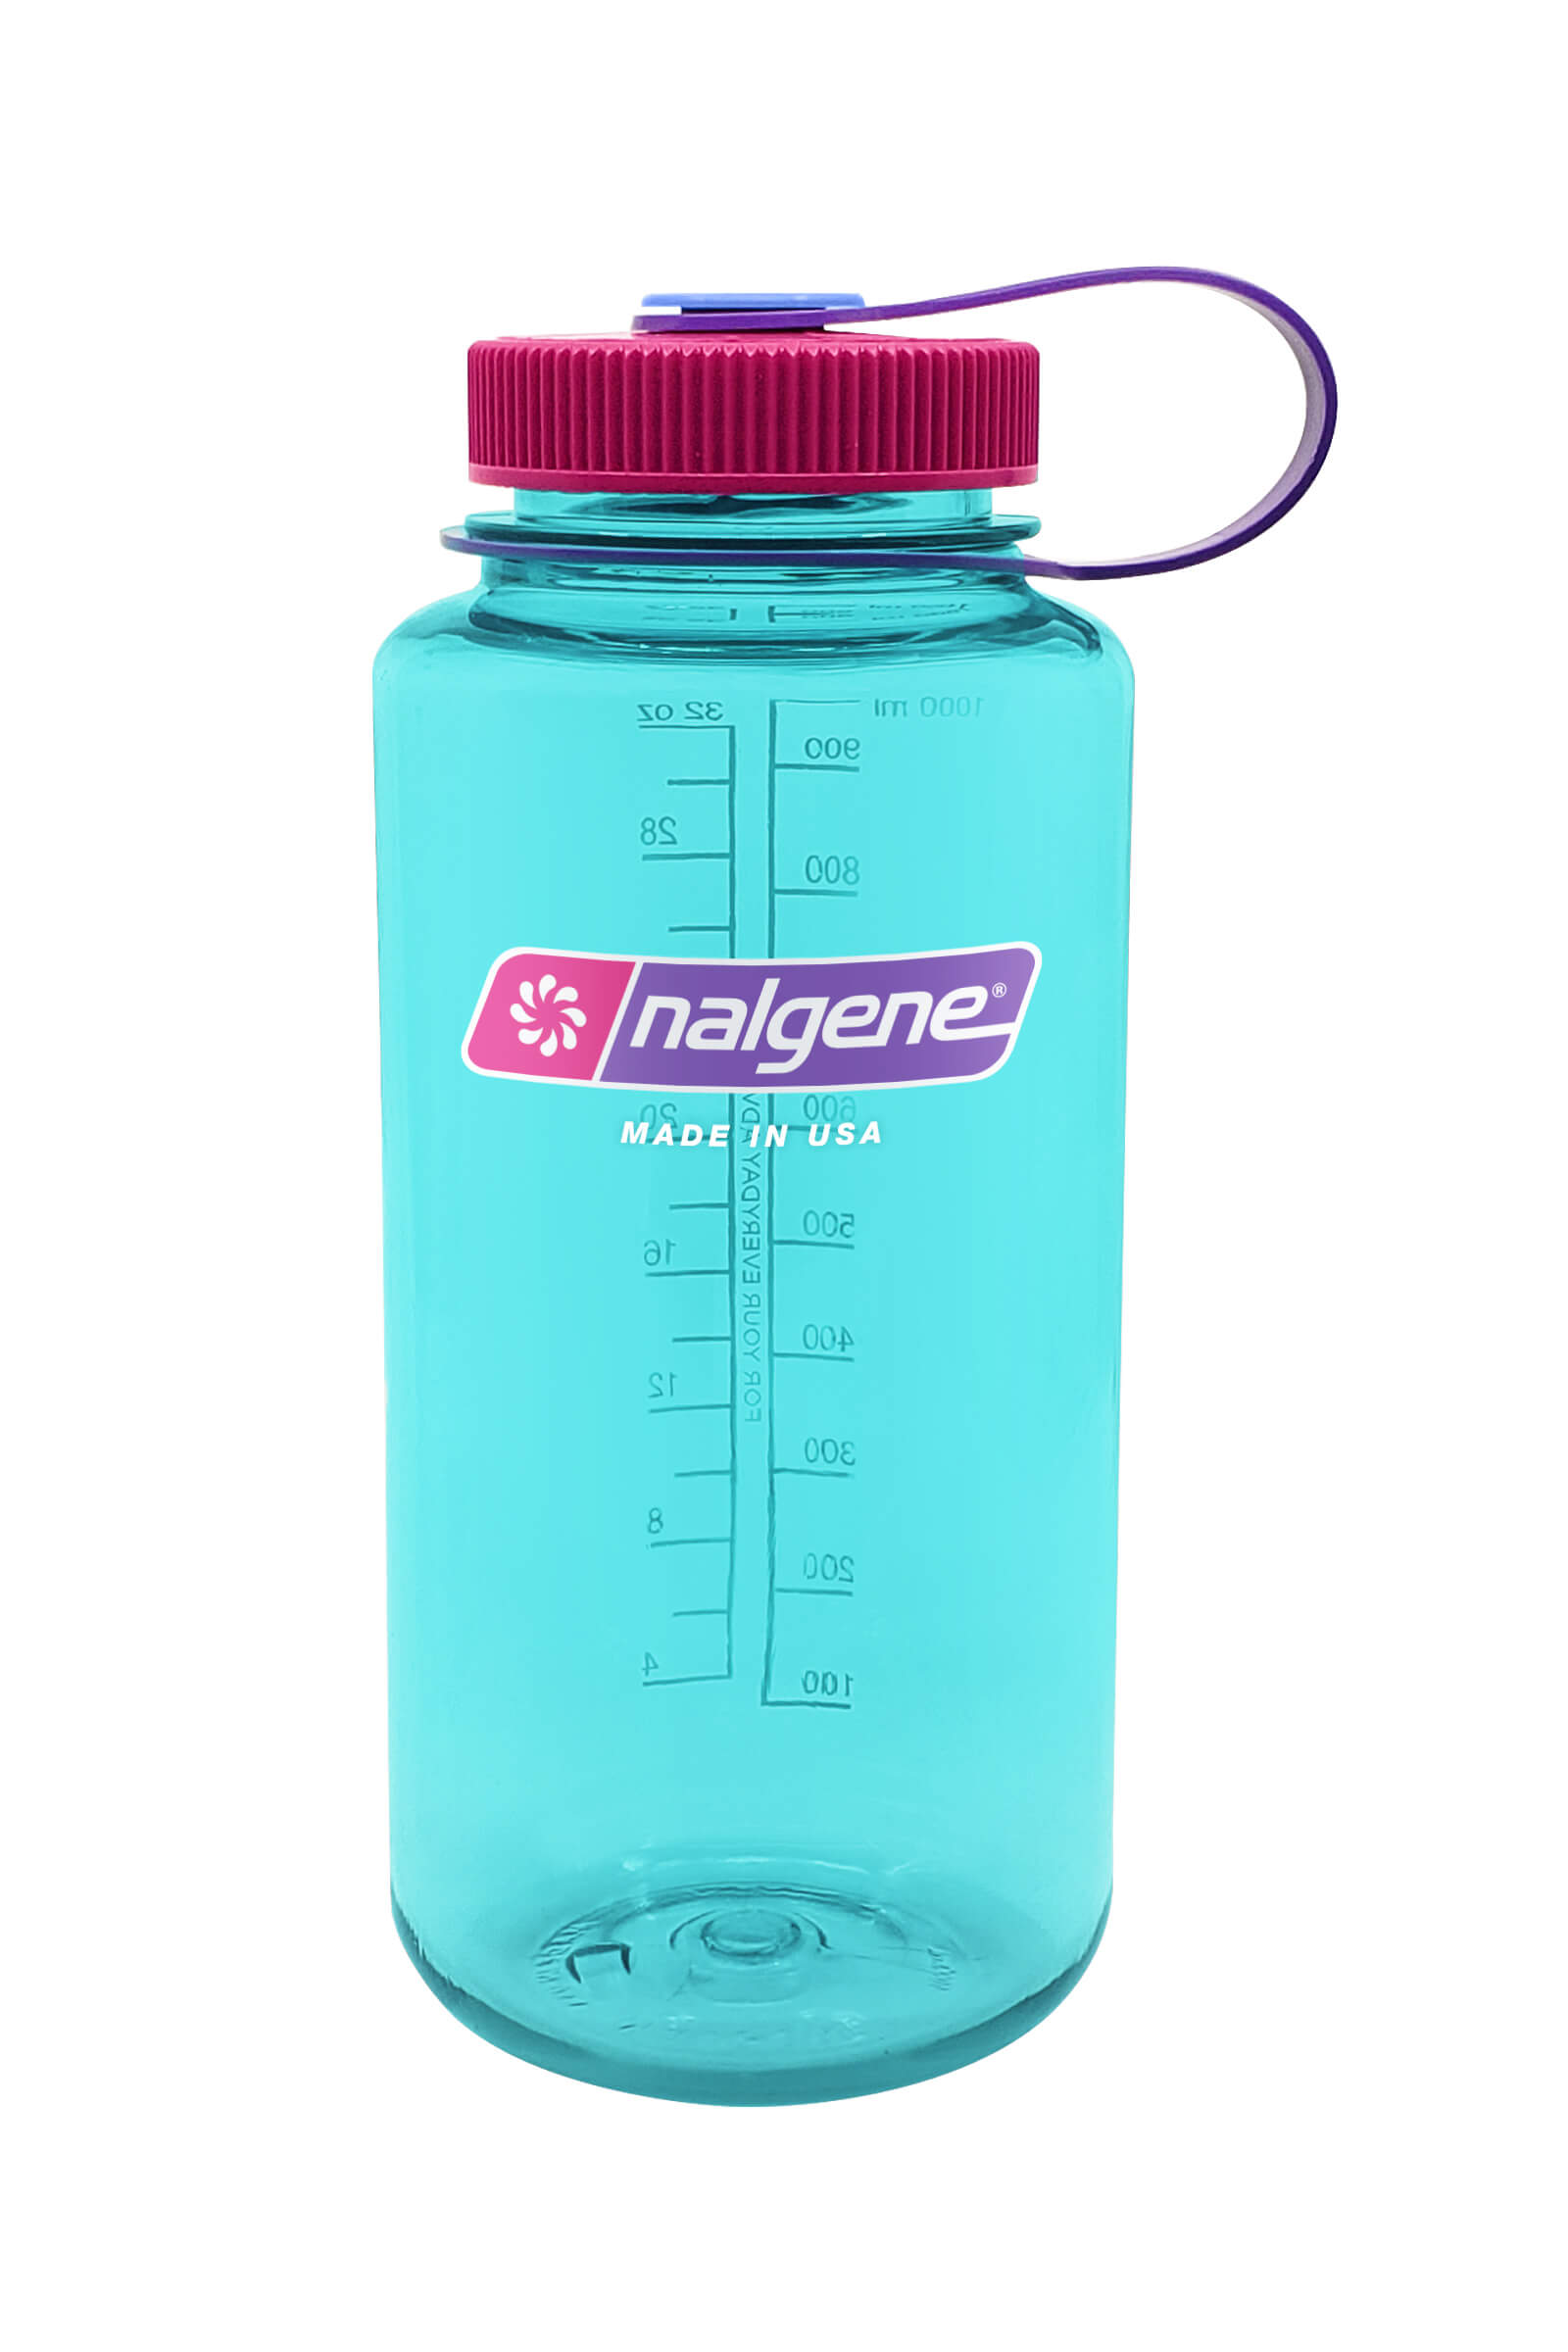 Nalgene 341827 Wide Mouth 1qt Bottle Purple White Lid for sale online 